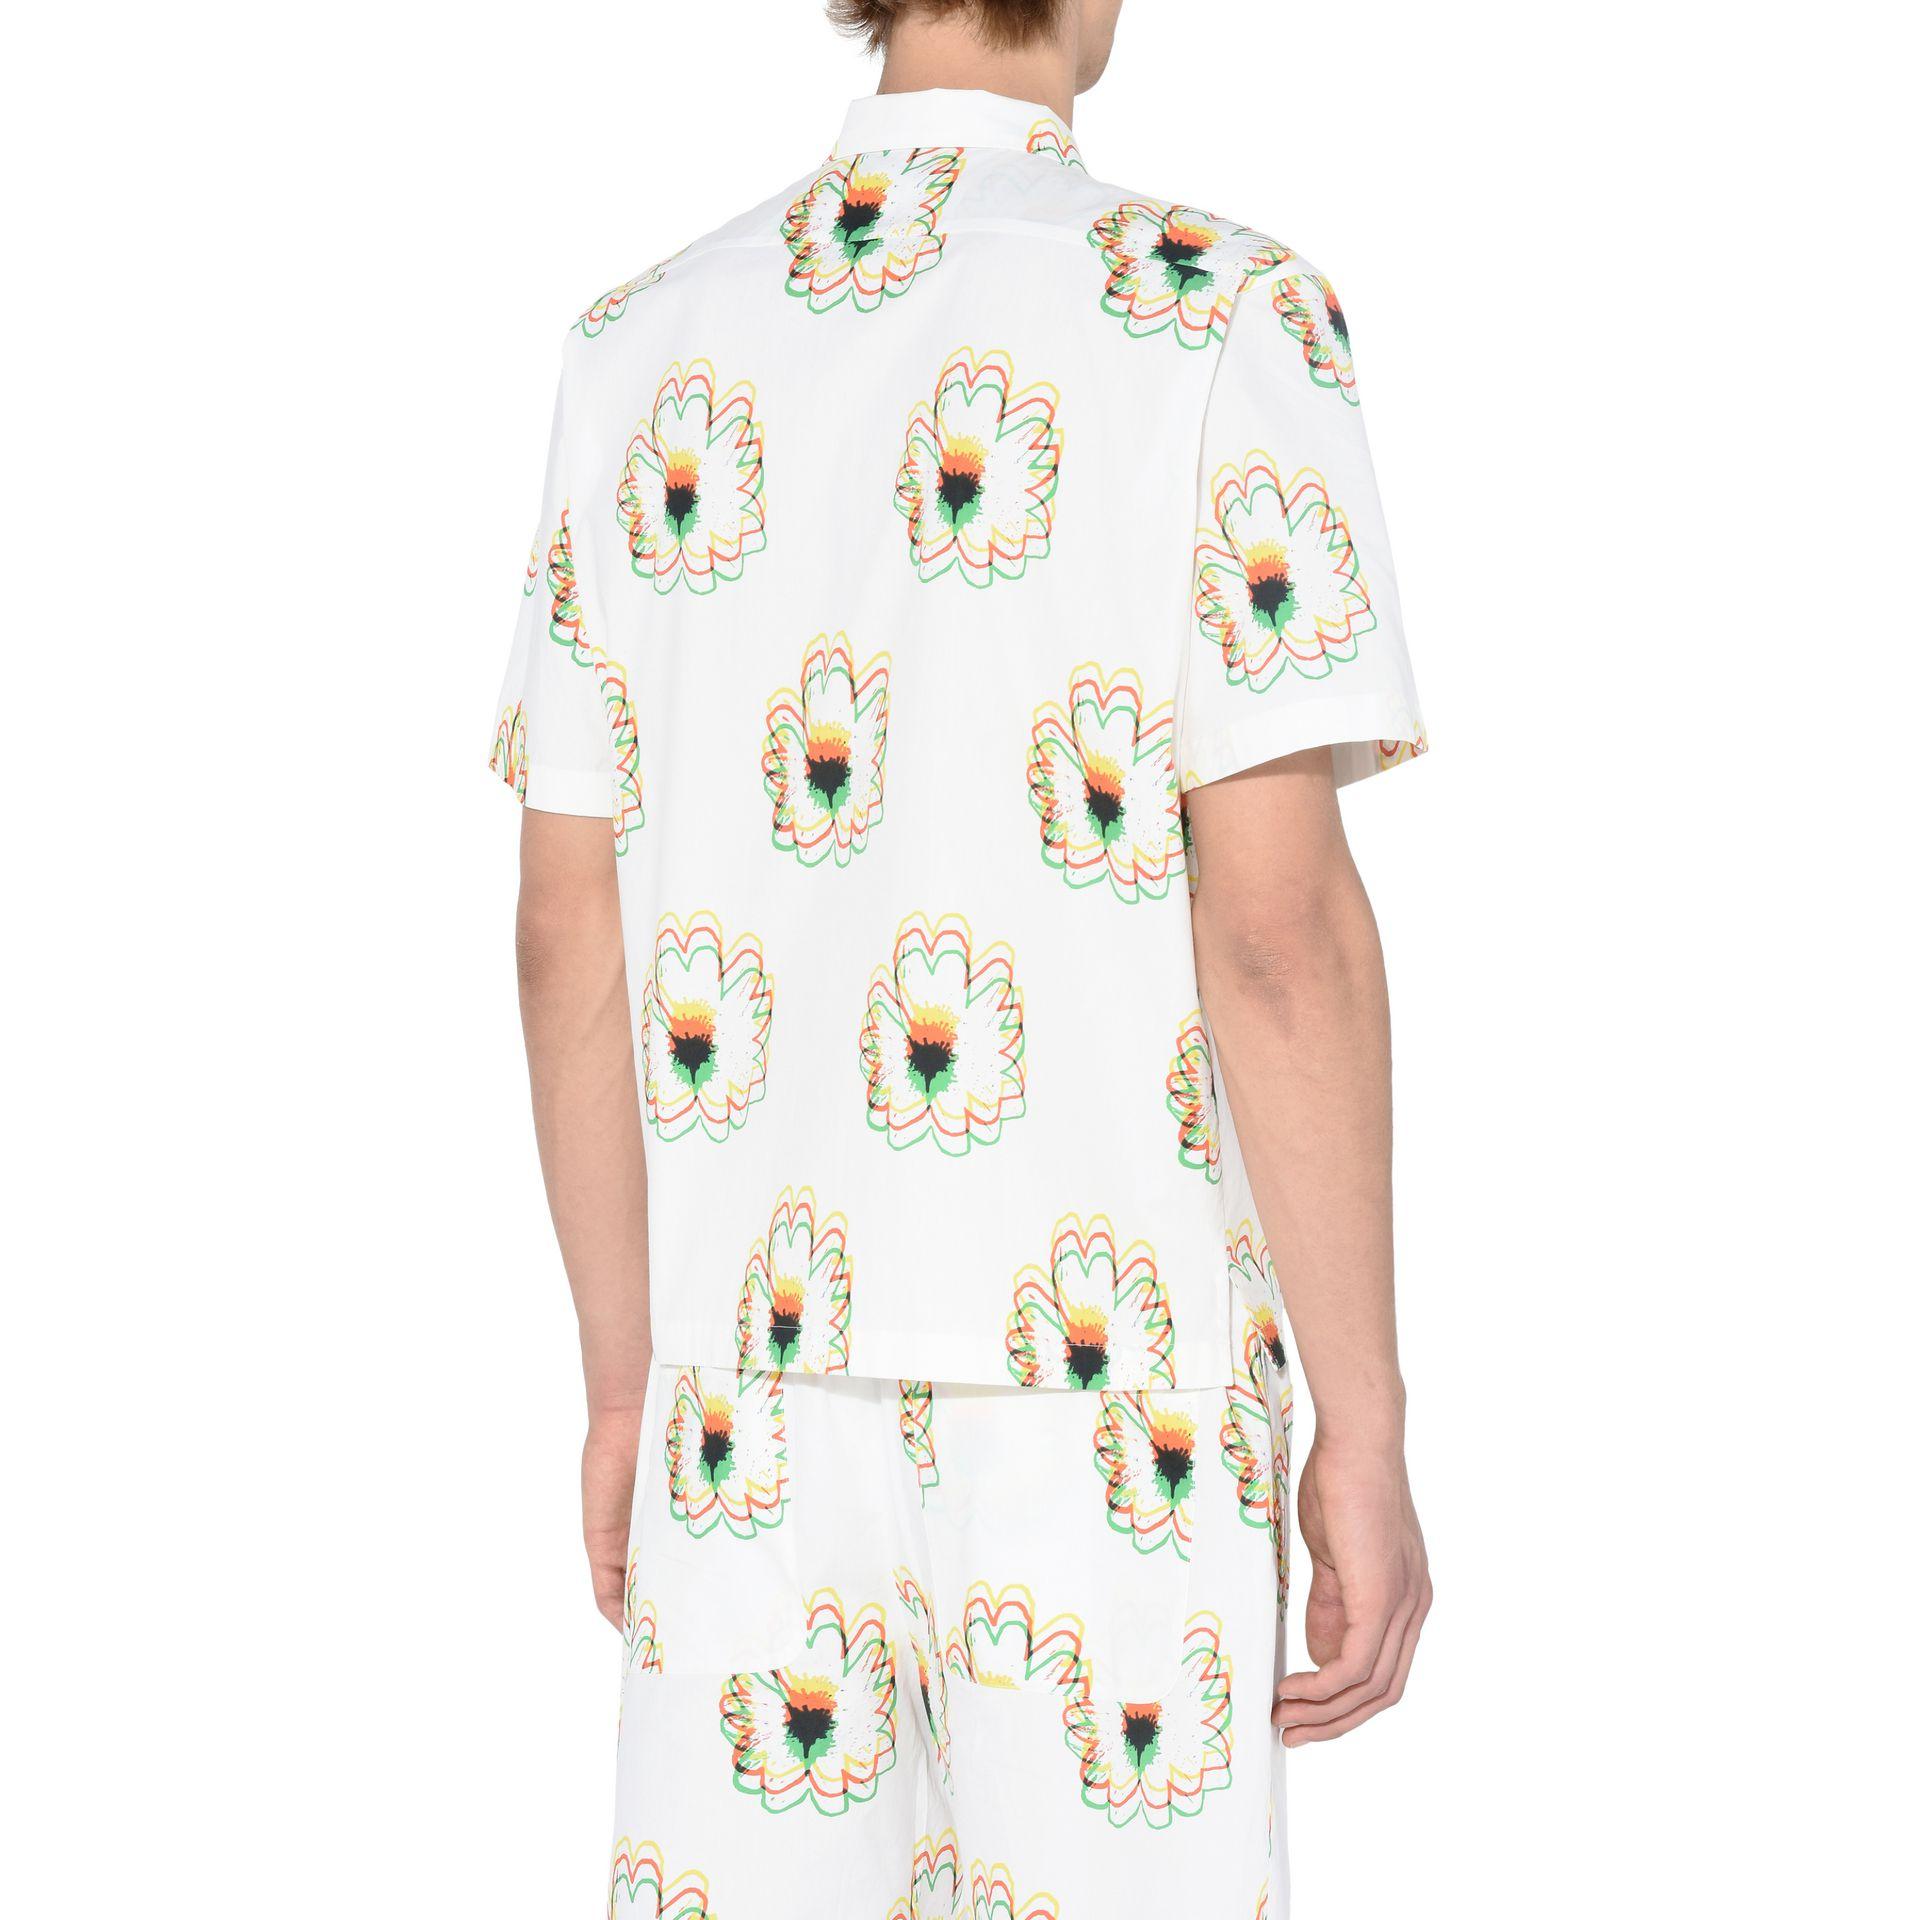 Stella McCartney Psychedelic Flower Print Shirt in White for Men - Lyst